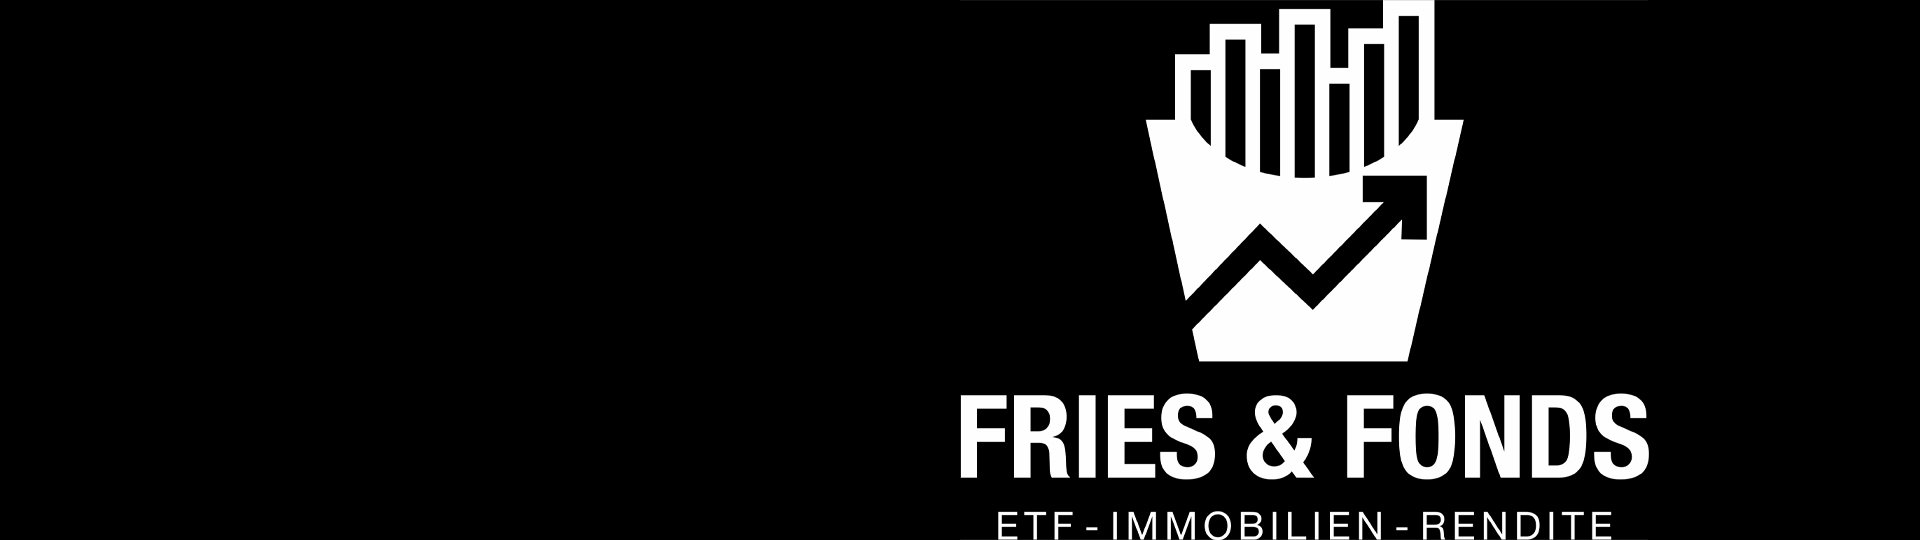 Fries-Fonds-1920x540.jpg